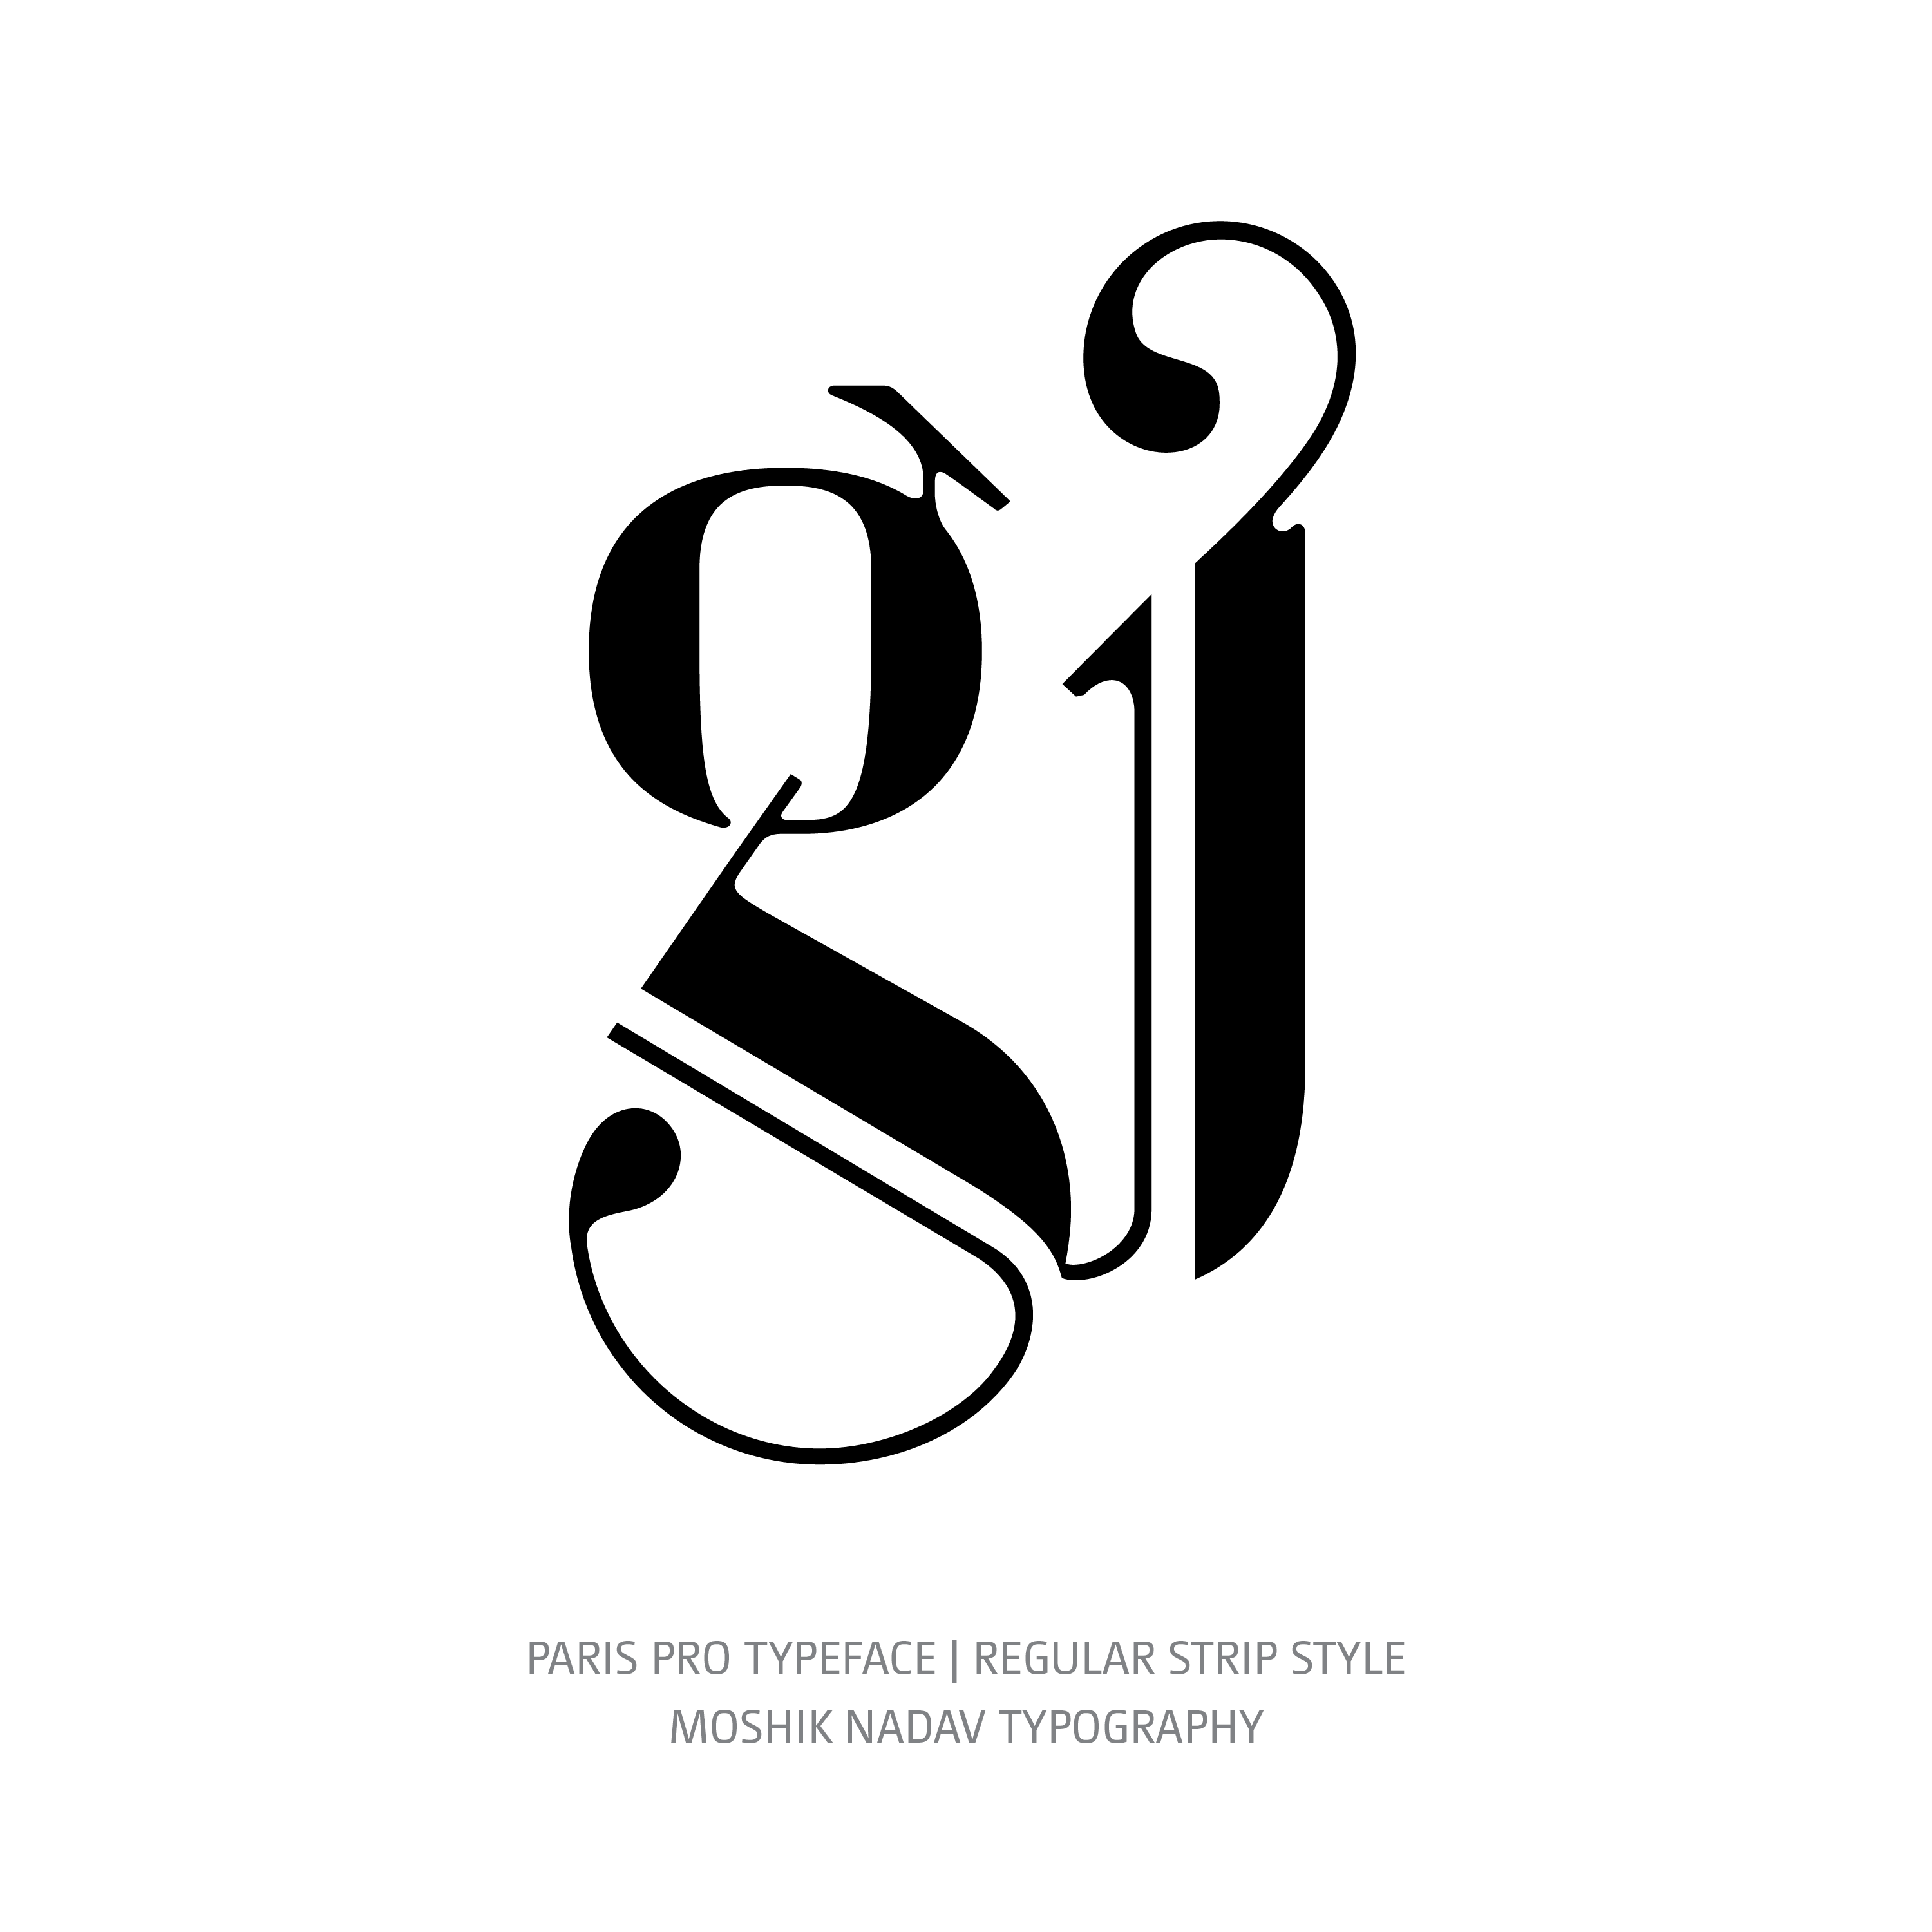 Paris Pro Typeface Regular Strip gj ligature